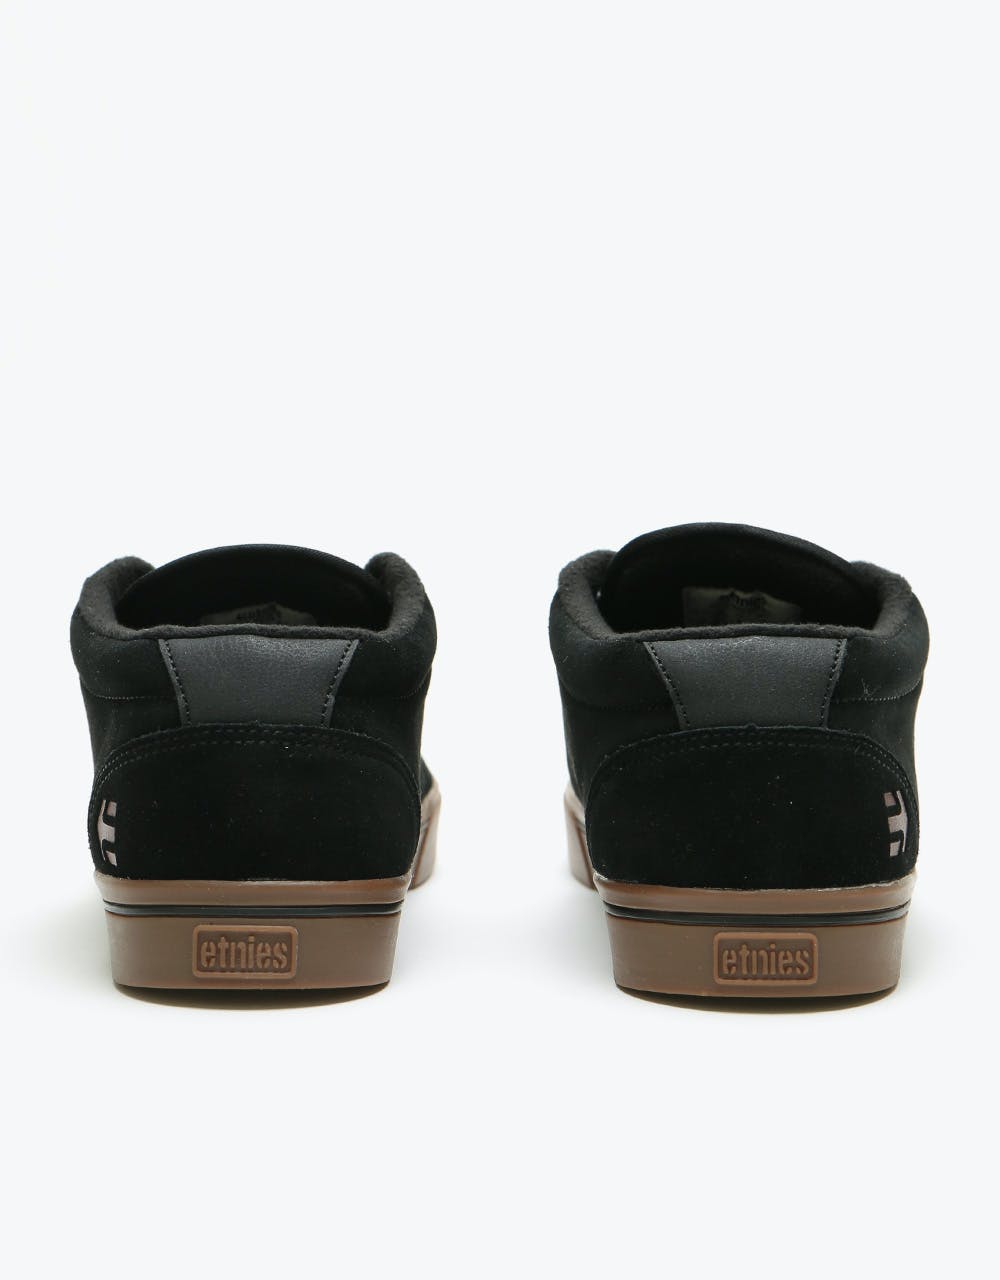 Etnies Jameson Mid Skate Shoes - Black/Gum